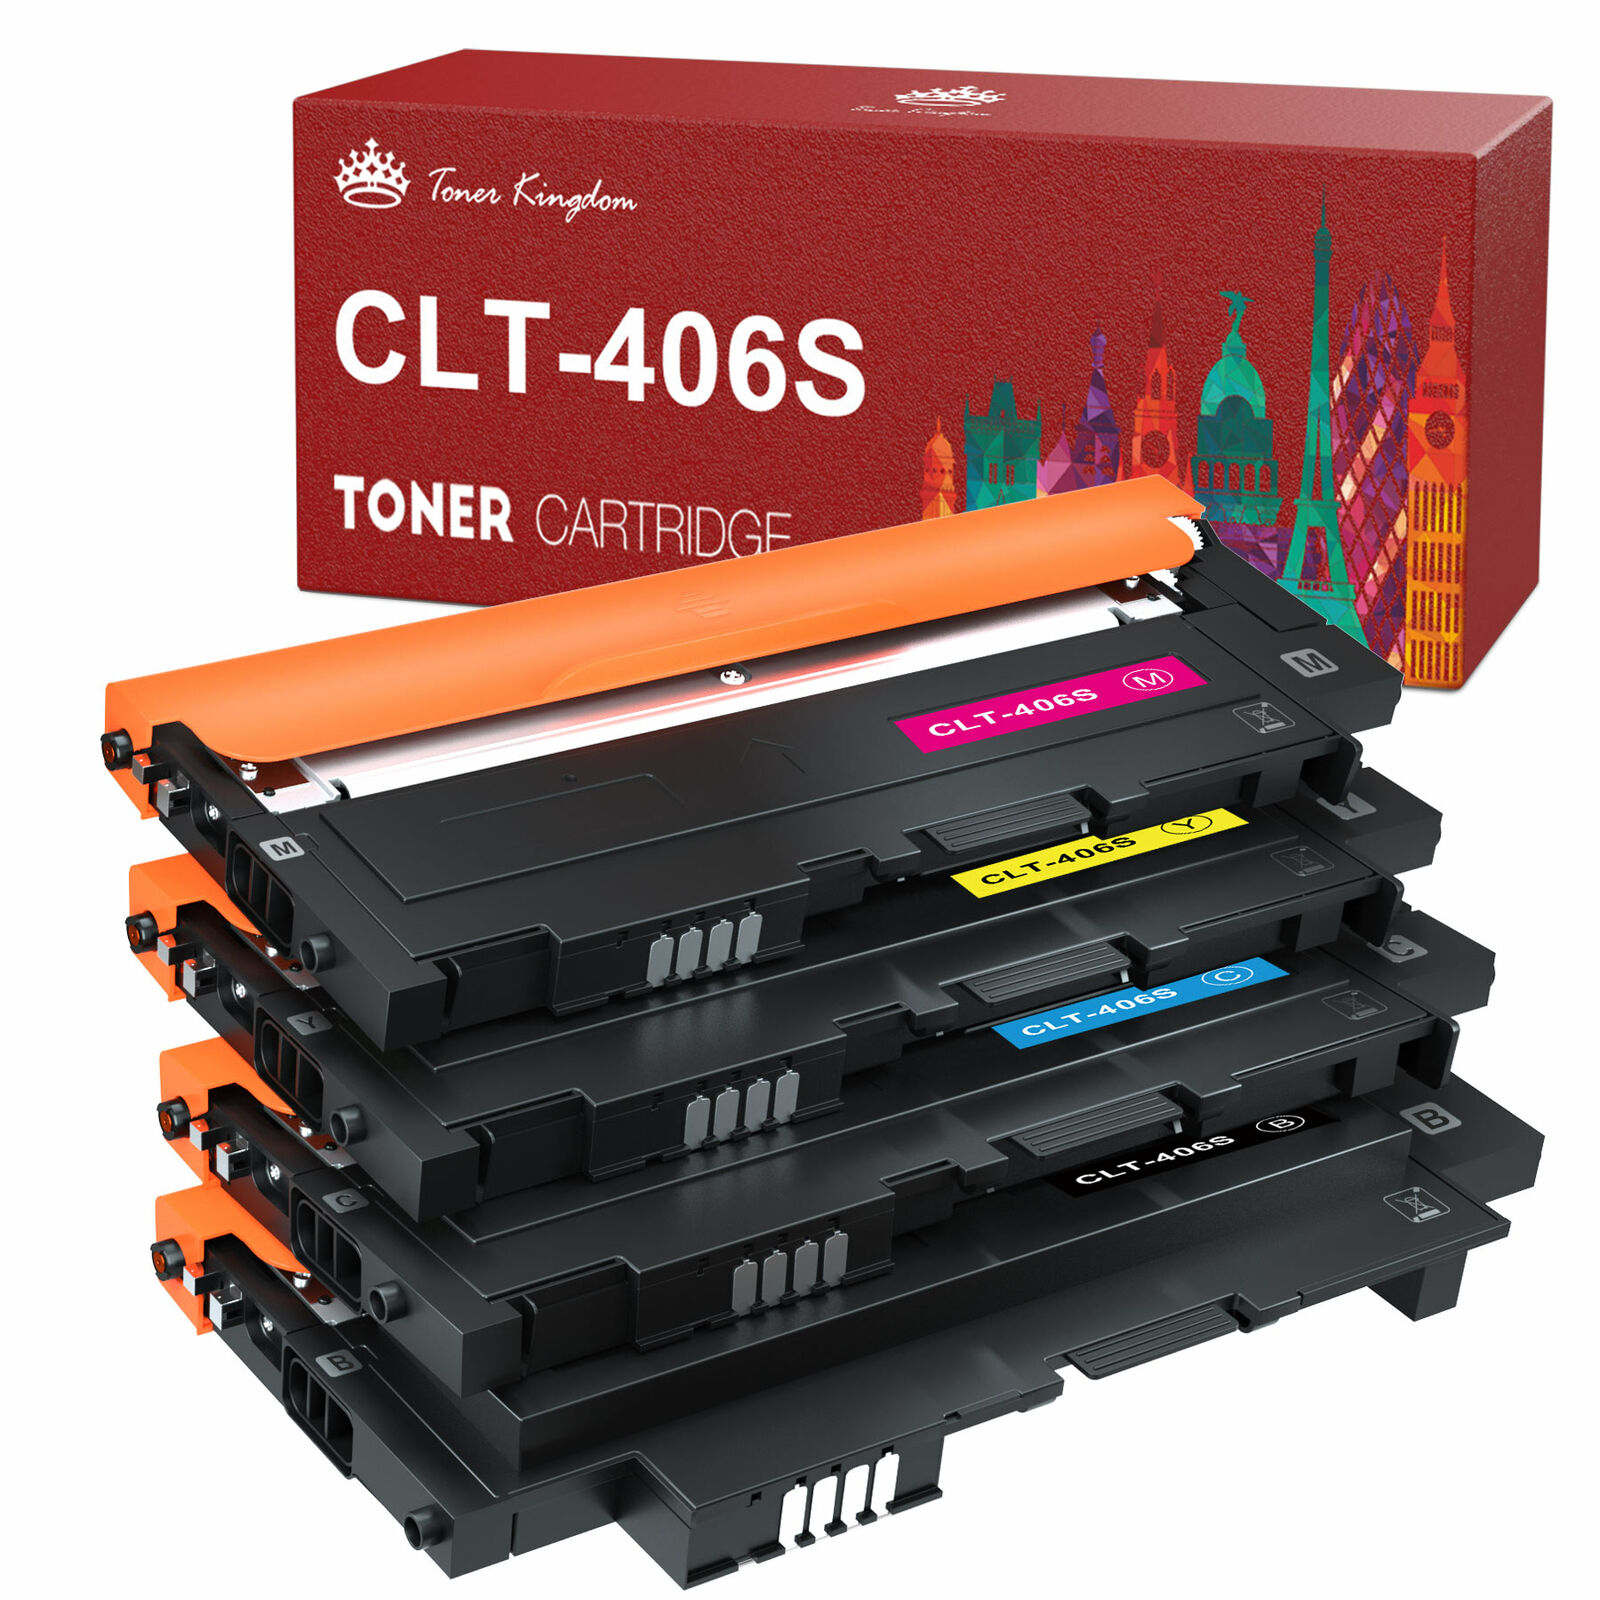 Reageer Roux Aggregaat 4 Pack Color CLT-K406S Toner for Samsung CLP-365W CLX-3305FW Xpress C410W  C460FW 6658461938635 | eBay